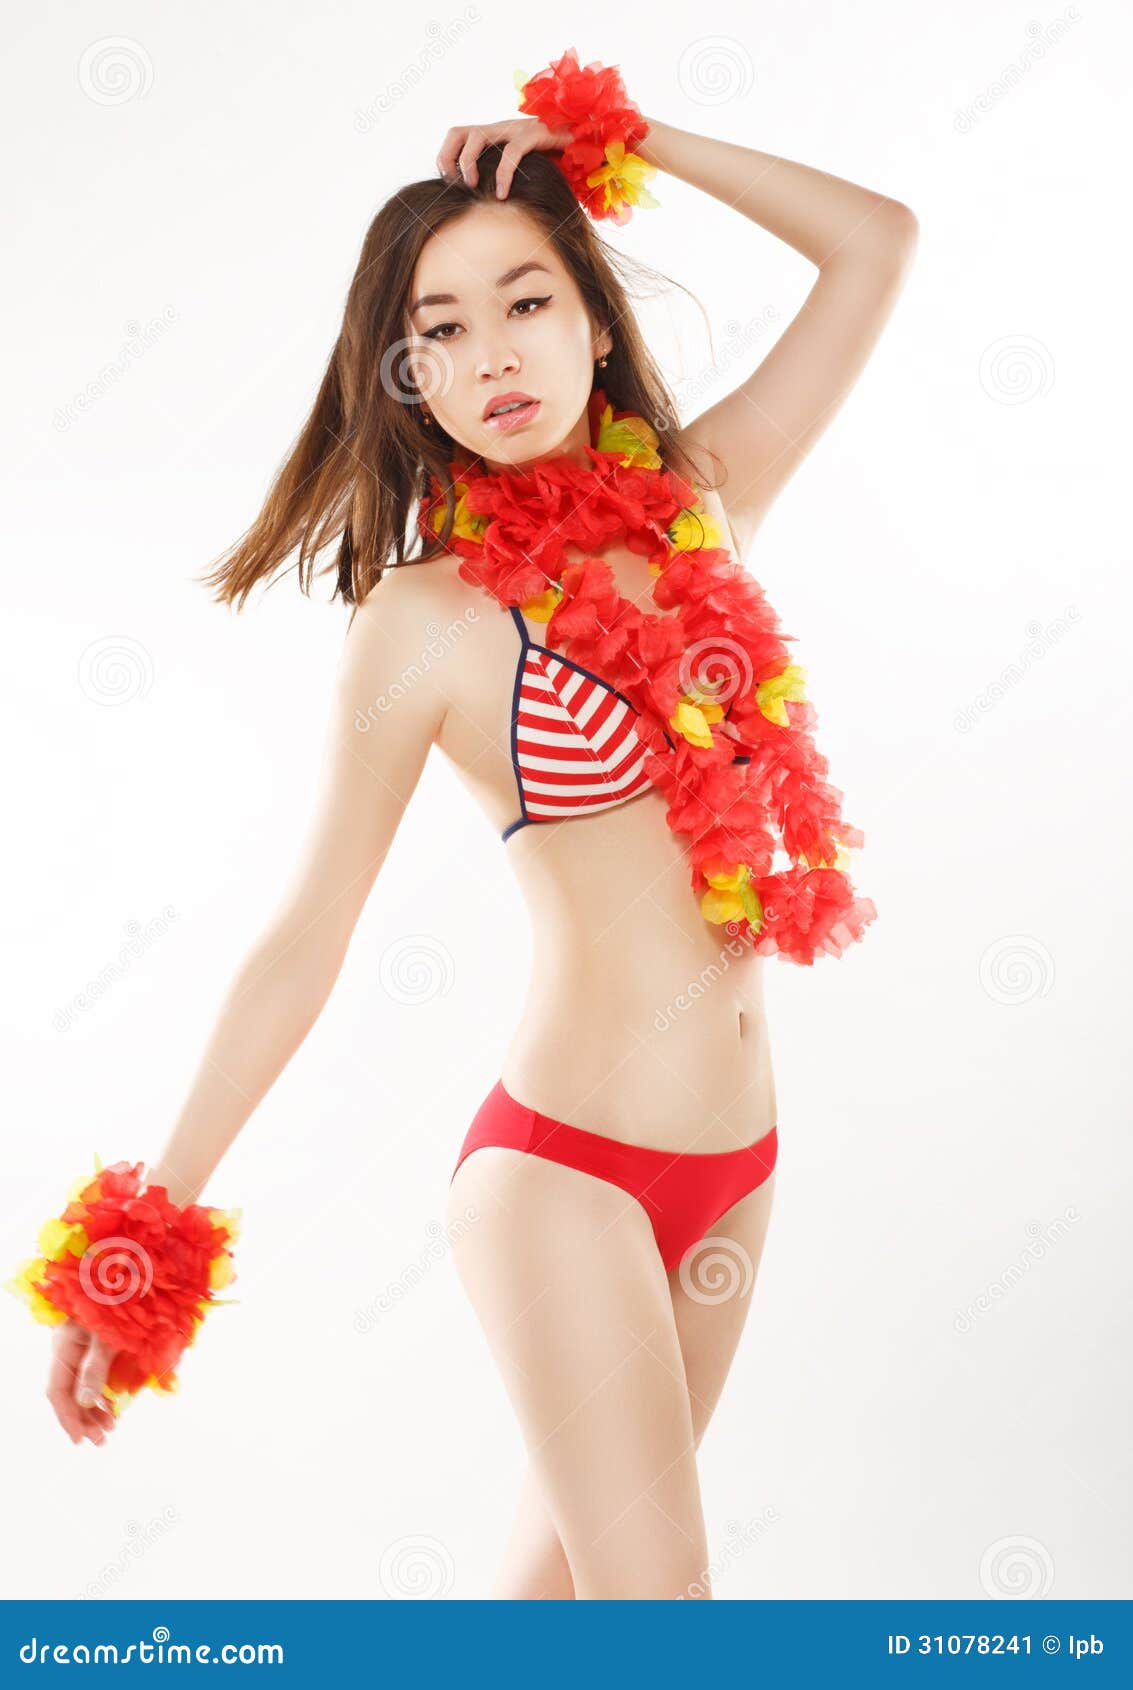 Fantasy. Sensual Slim Japanese Girl in Red Bikini with Origami Flowers Stock Image - Image of nightlife: 31078241